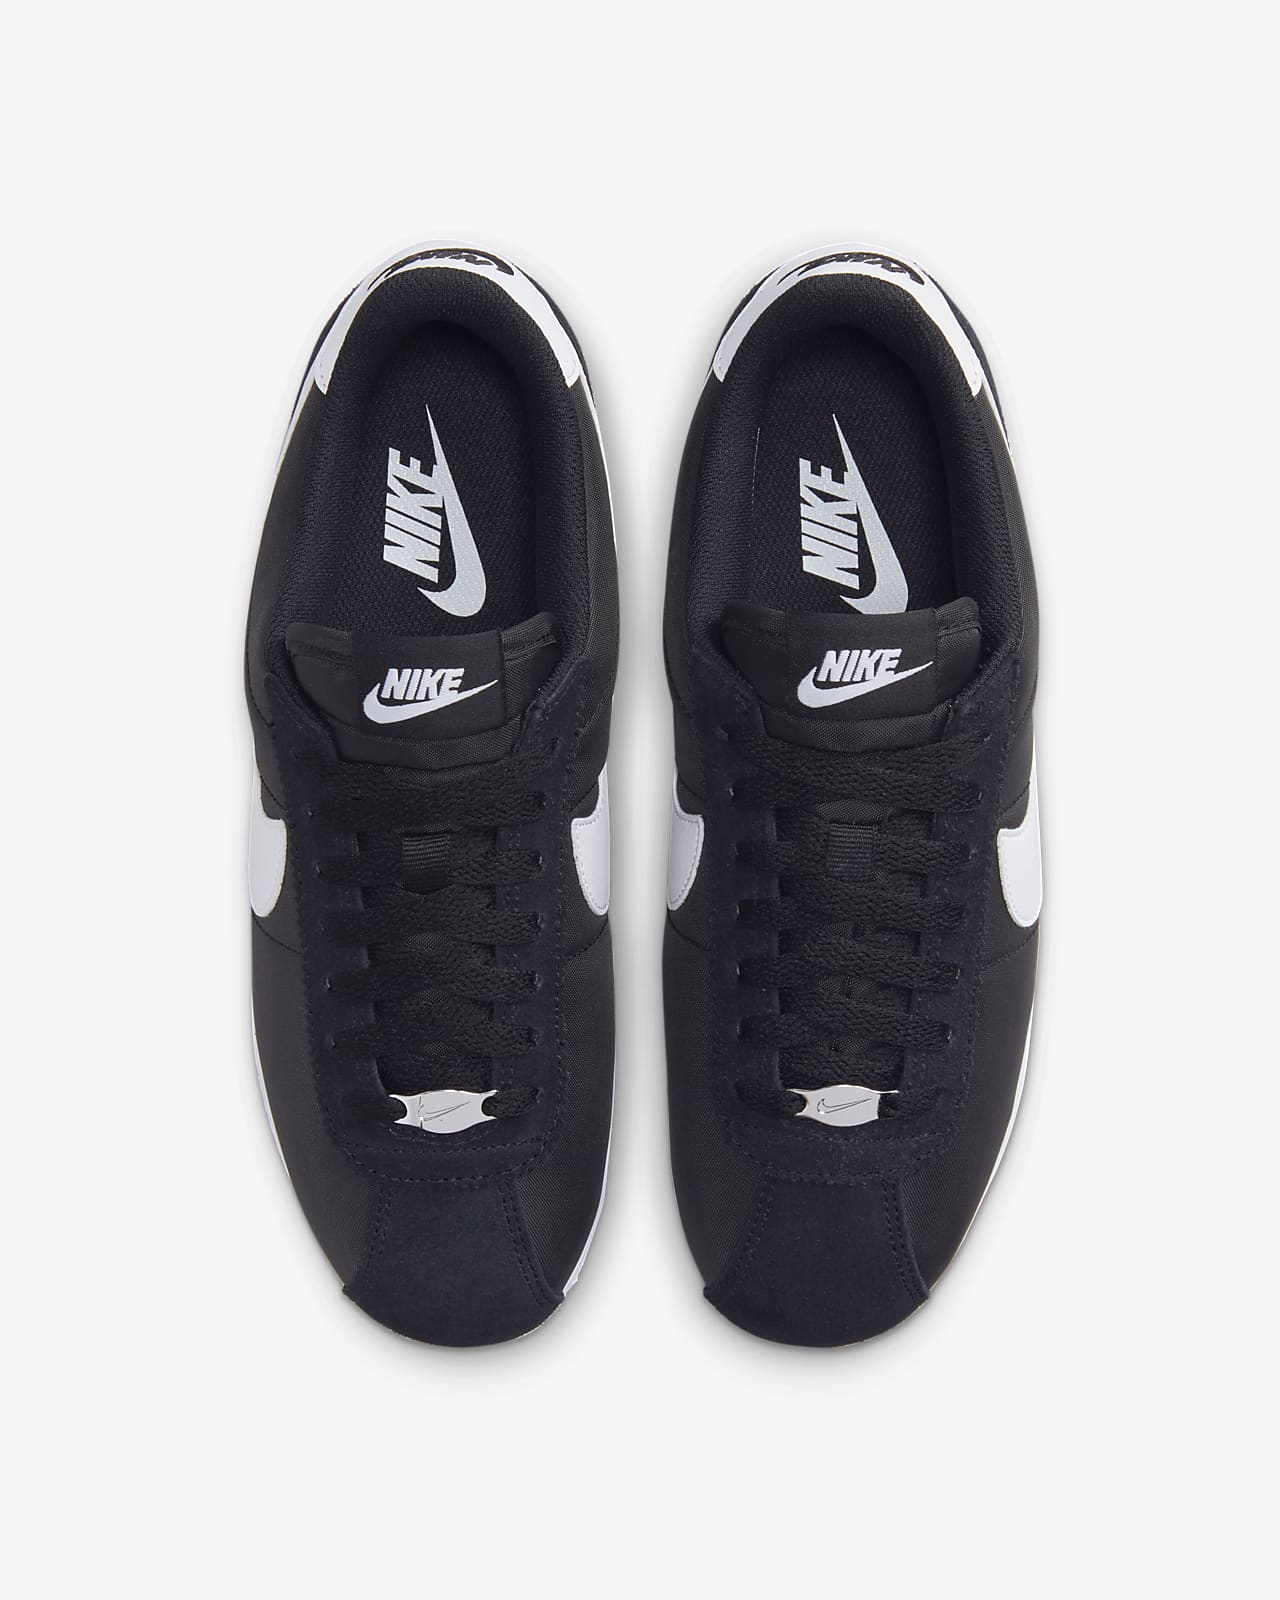 ONFEET  Nike Cortez Classic Leather Black\White 